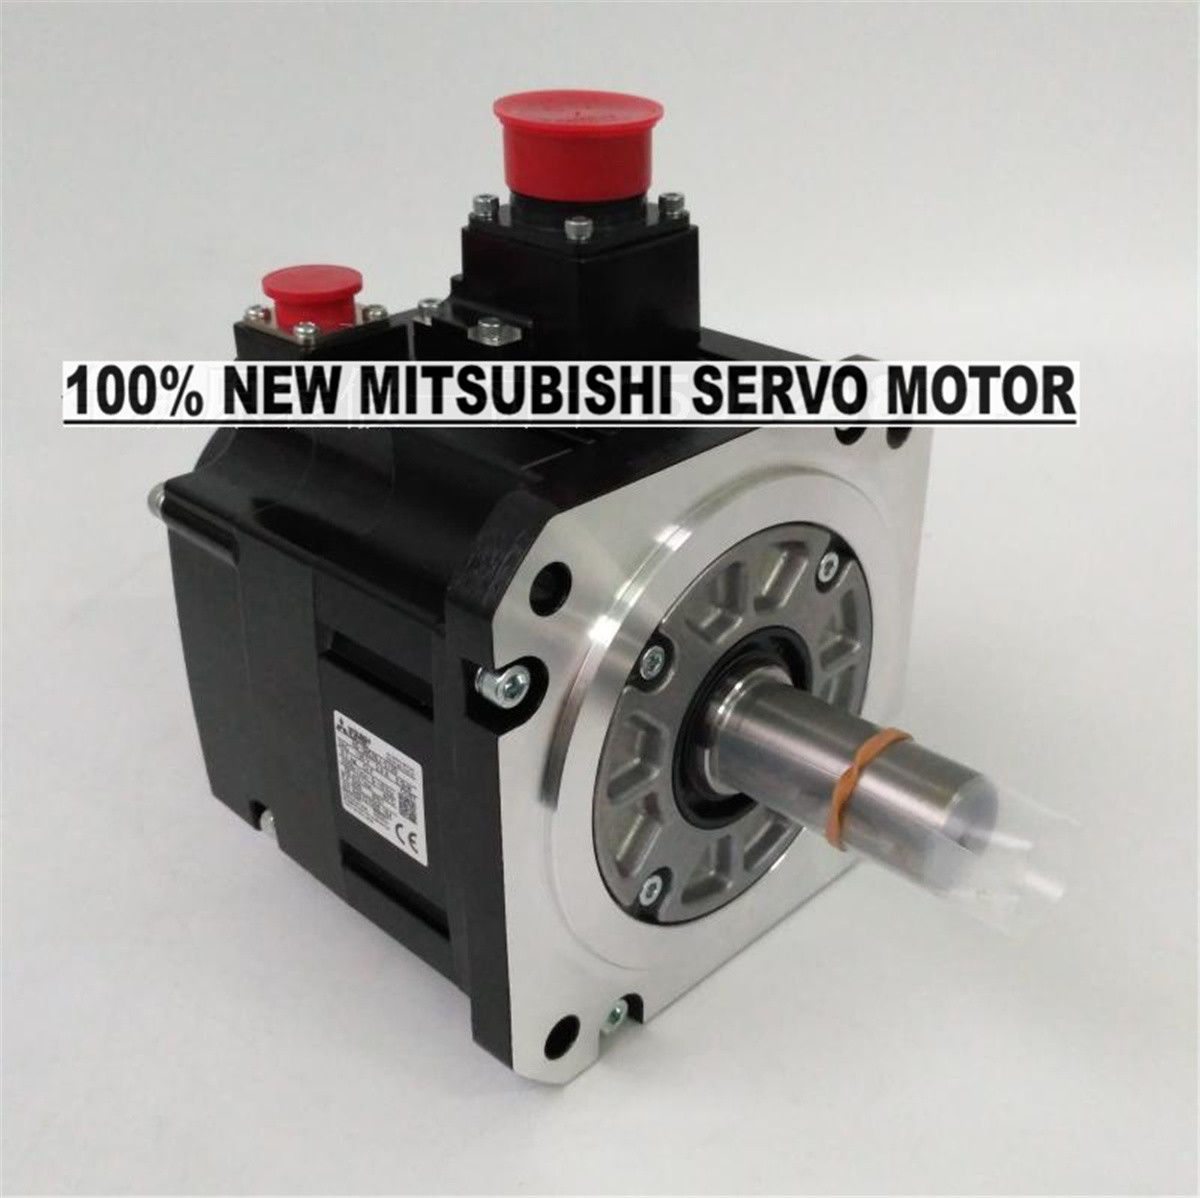 Brand NEW Mitsubishi Servo Motor HG-SN52BJ-S100 in box HGSN52BJS100 - Click Image to Close